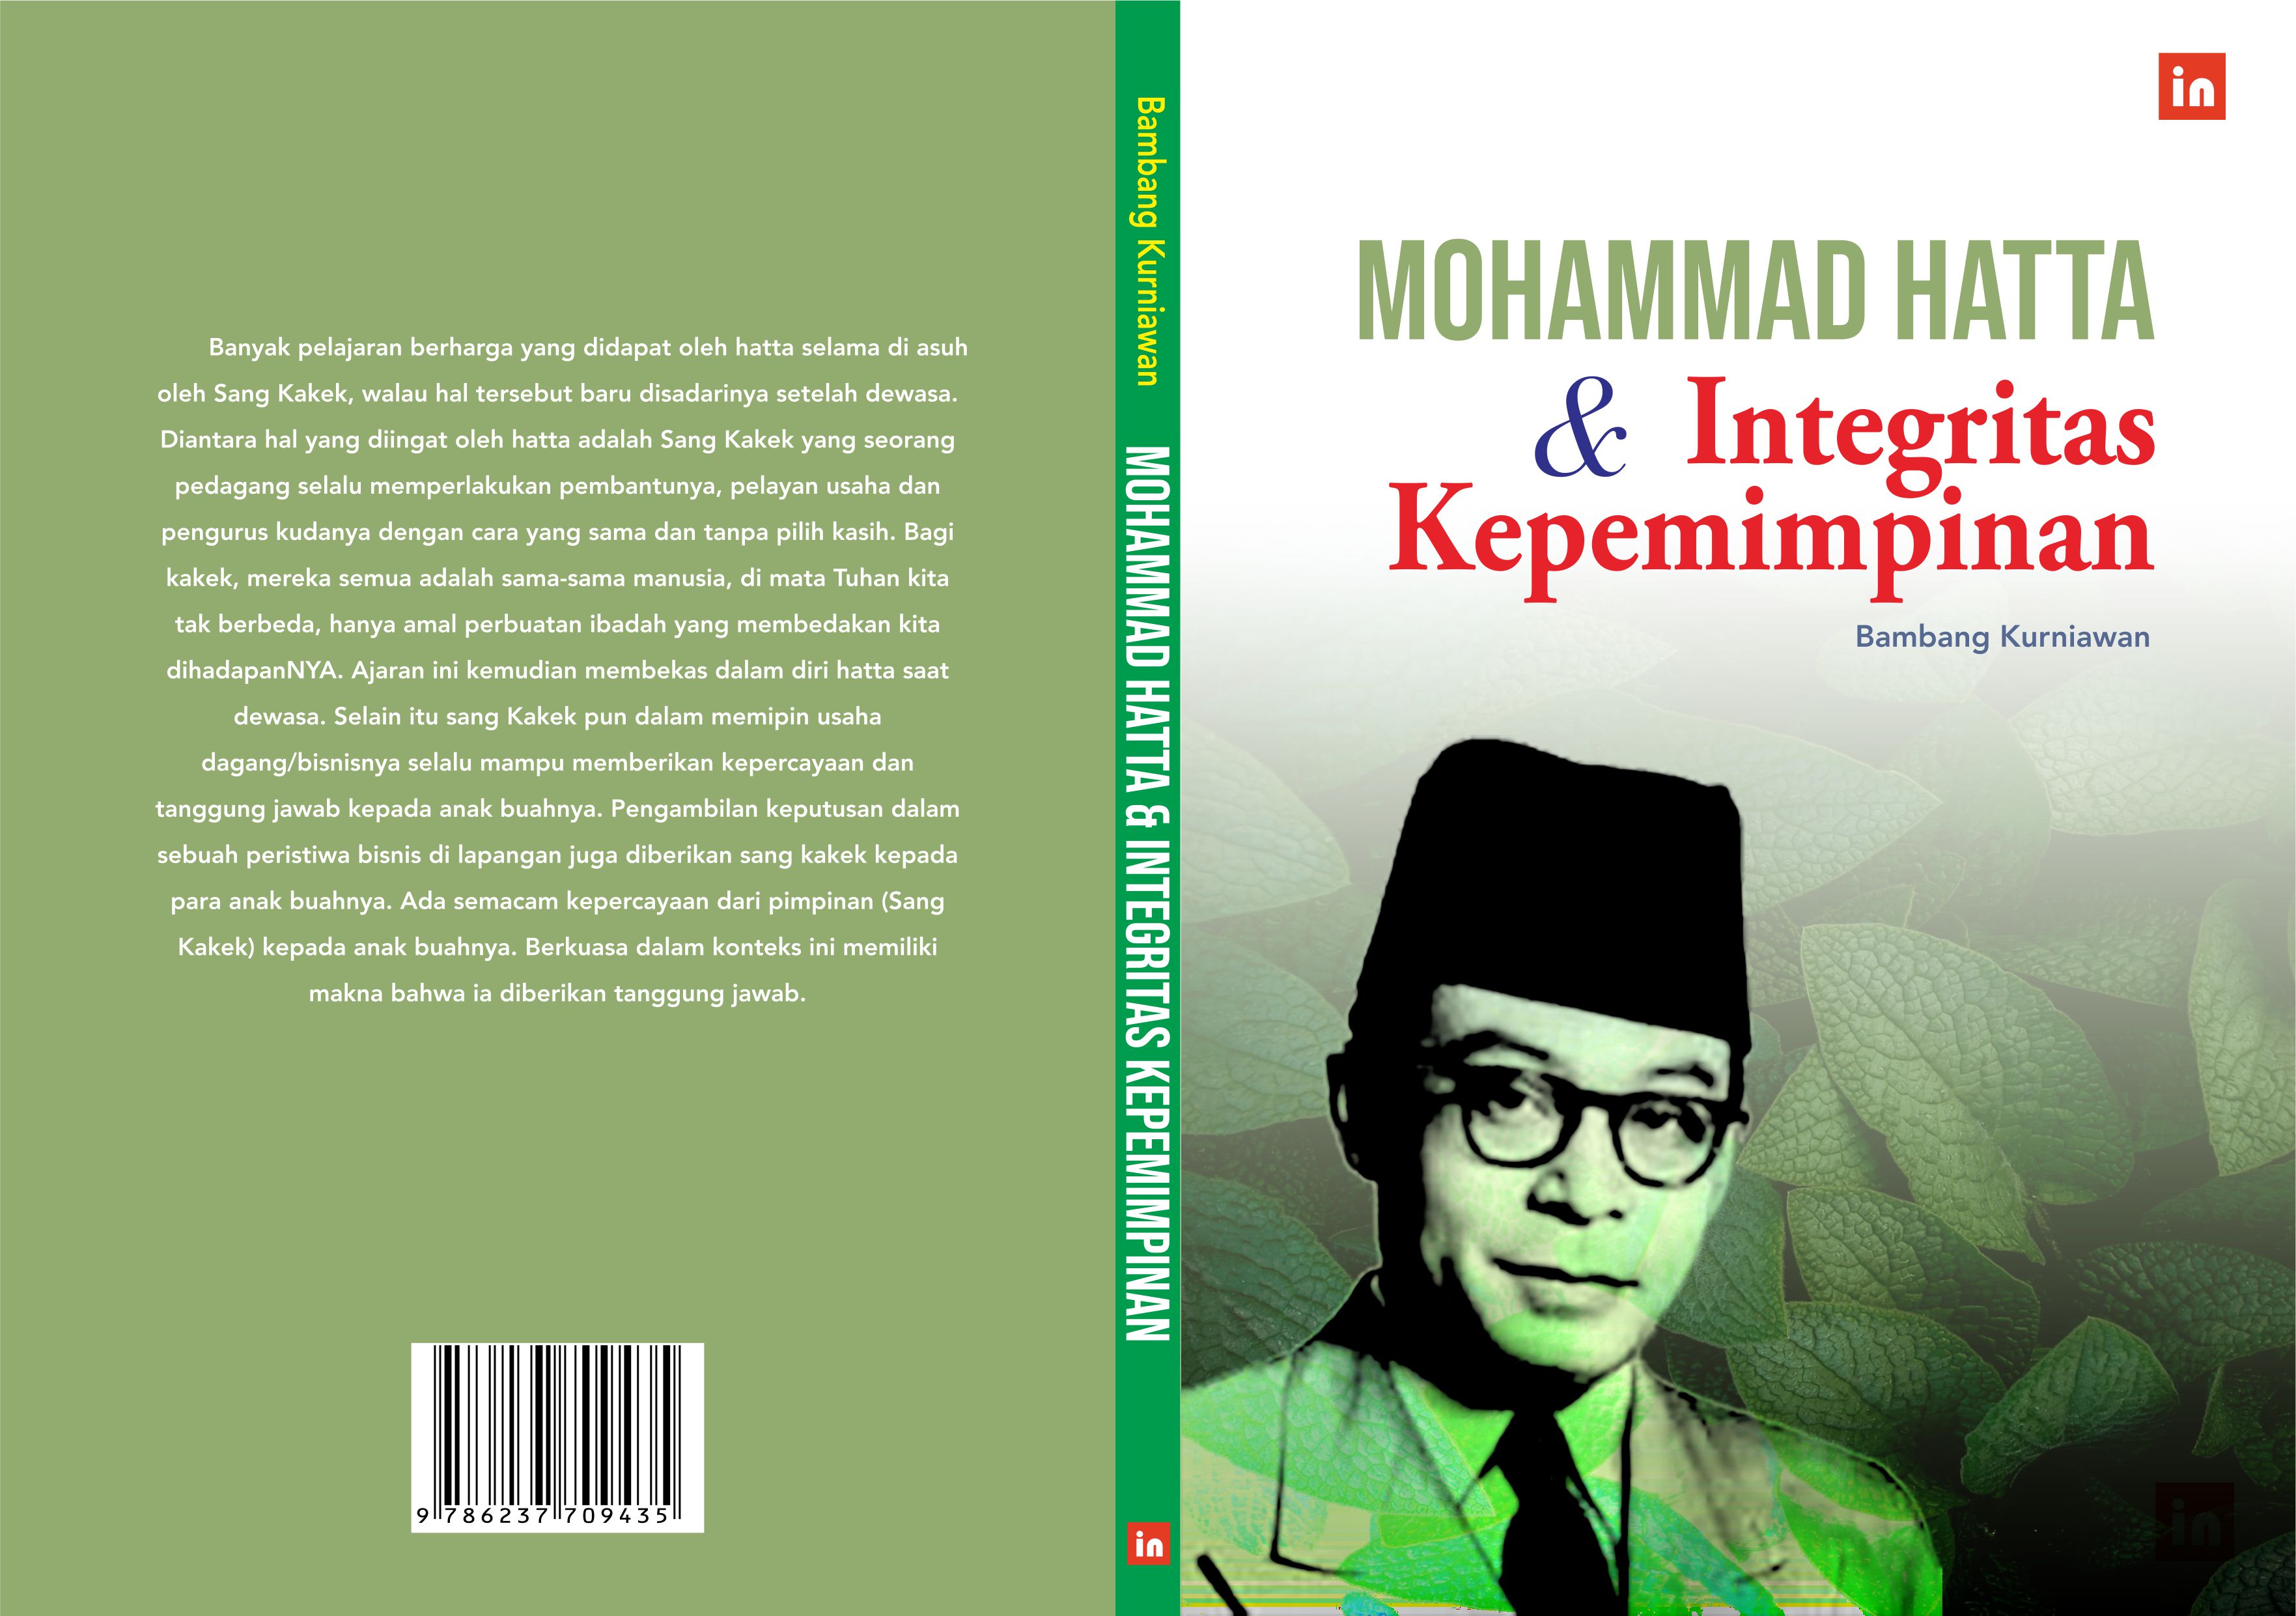 Mohammad Hatta & Integritas Kepemimpinan